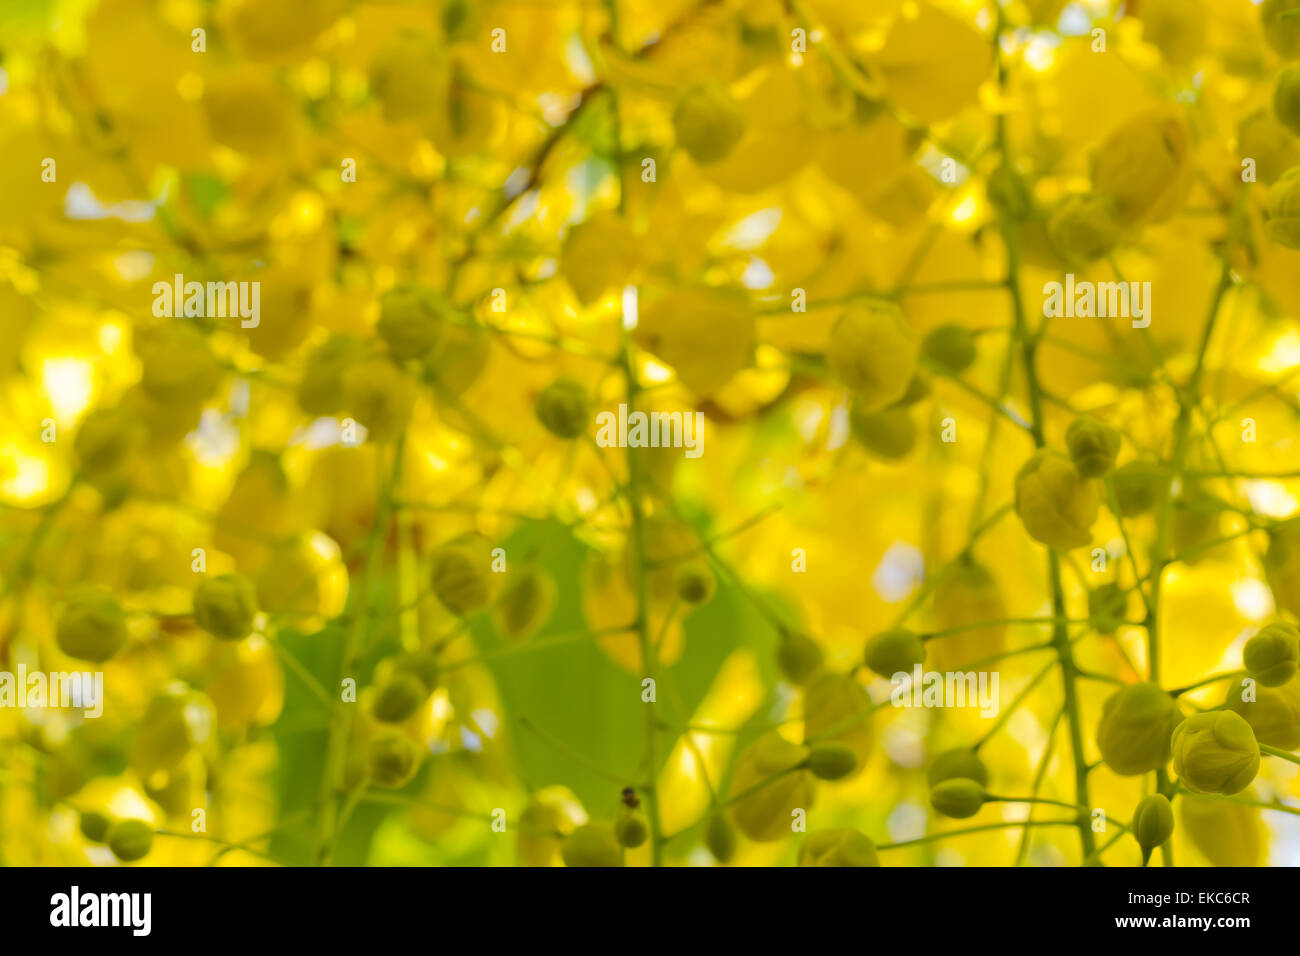 Focus Blur of Cassia fistula known as Golden Shower flowers Stock Photo